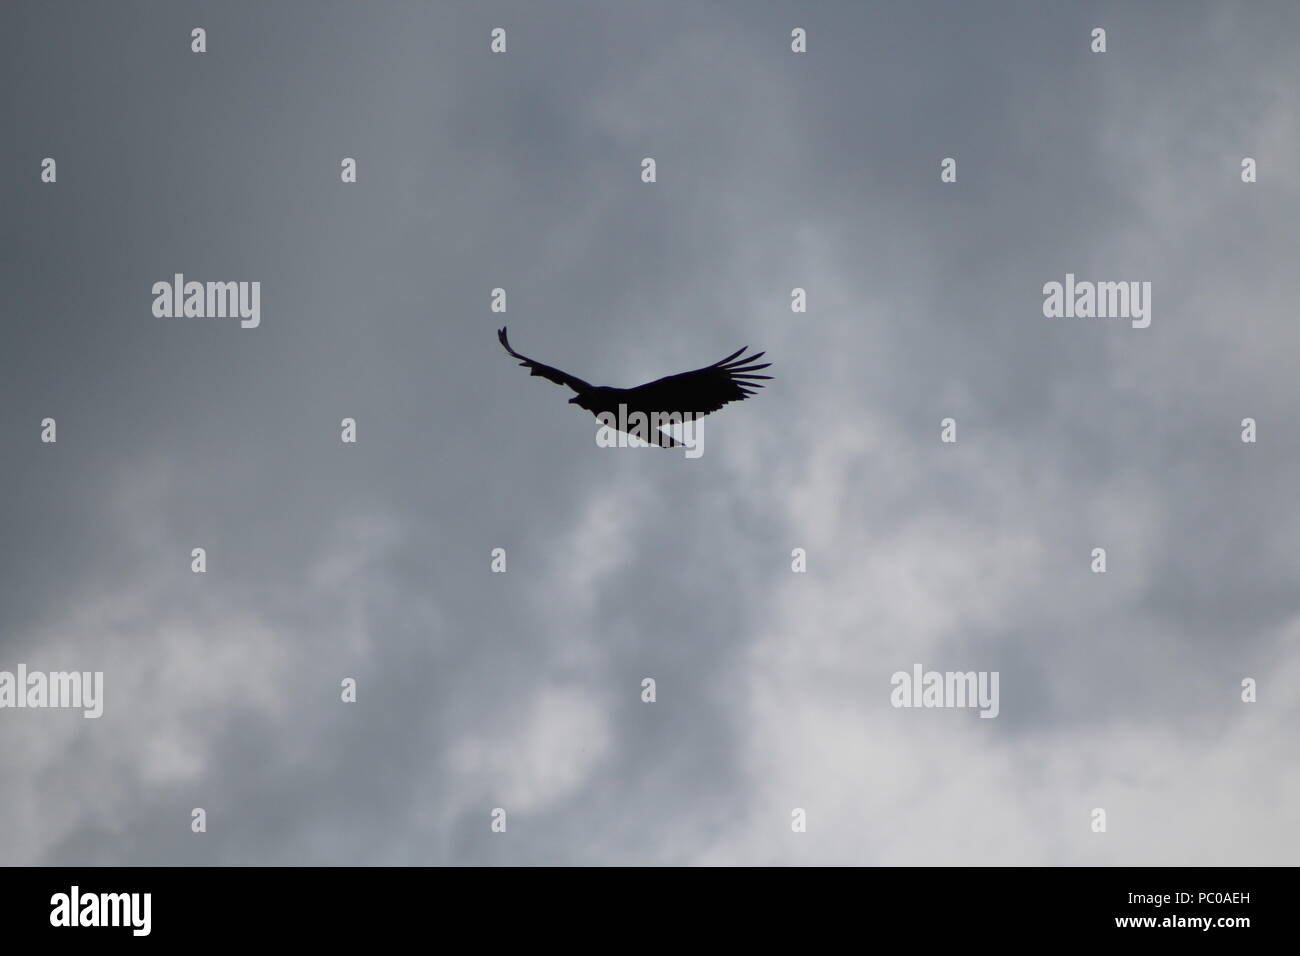 Flying bird silhouette Stock Photo